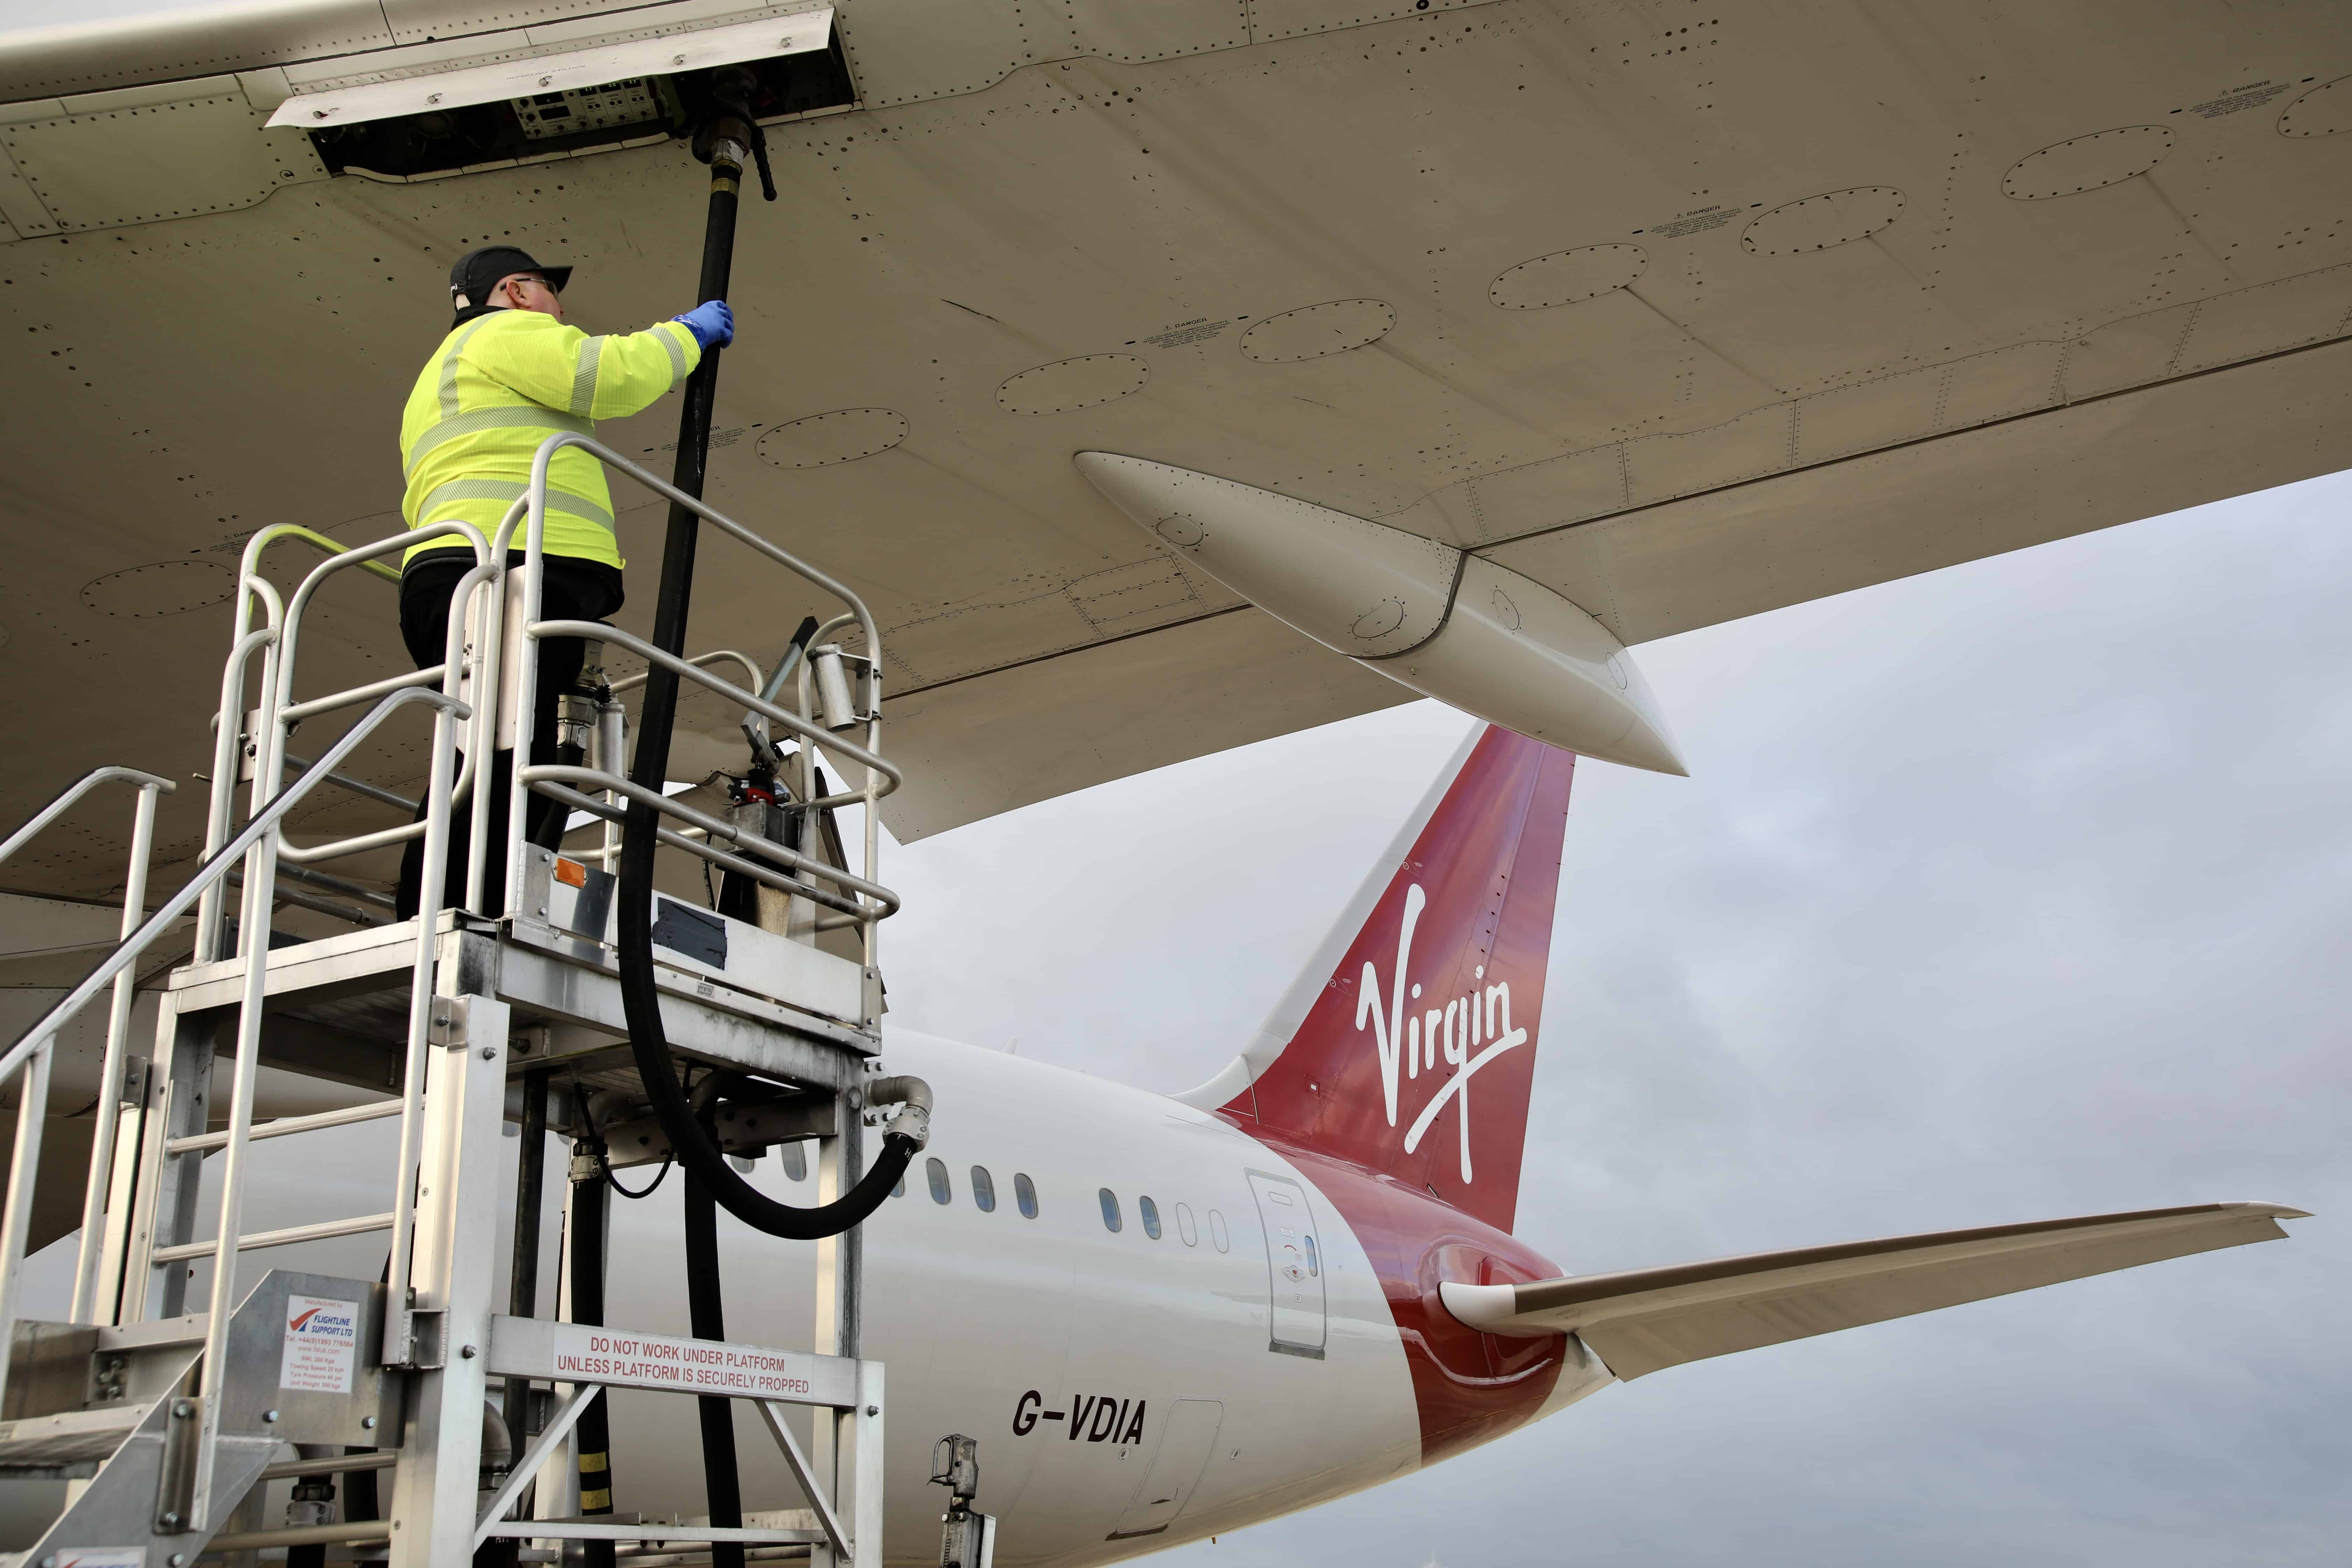 Virgin Atlantic’s 100% SAF flight cut over 60% of emissions